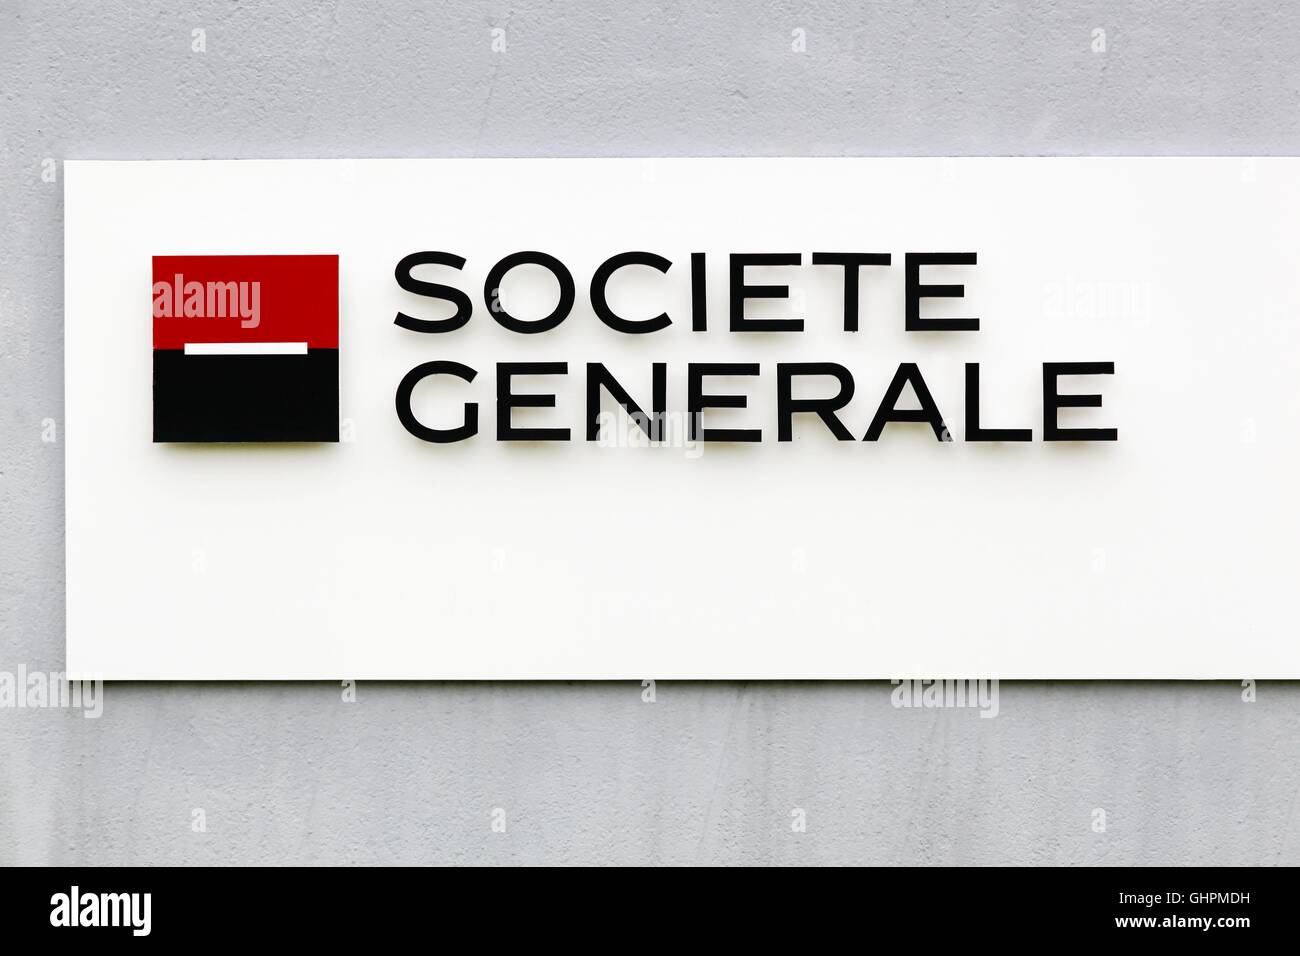 Societe Generale logo on a wall Stock Photo